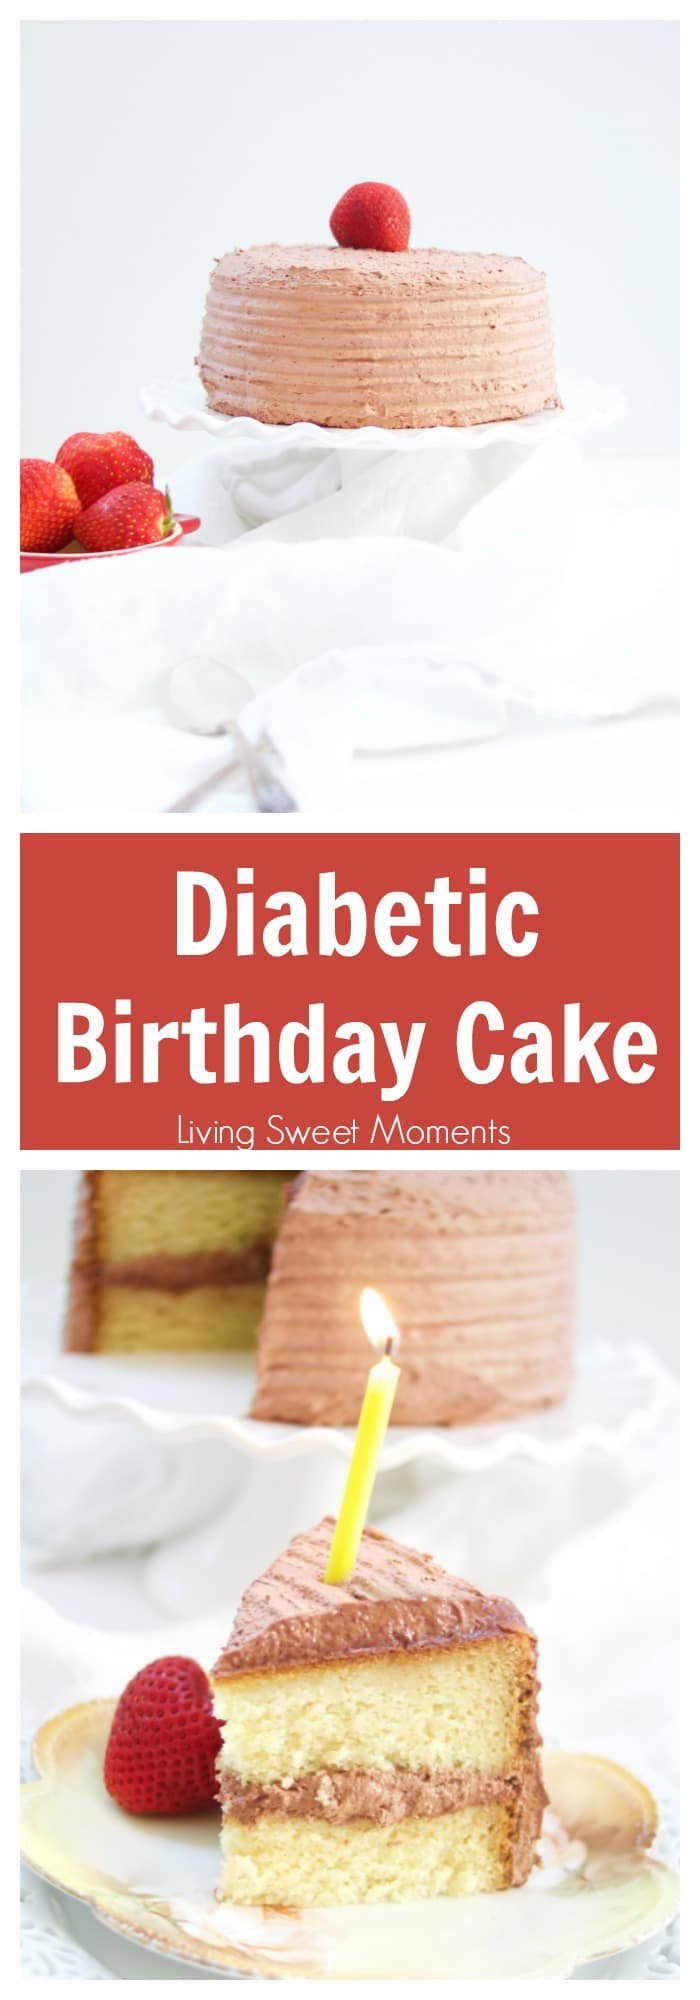 Free Birthday Dessert
 Delicious Diabetic Birthday Cake Recipe Living Sweet Moments